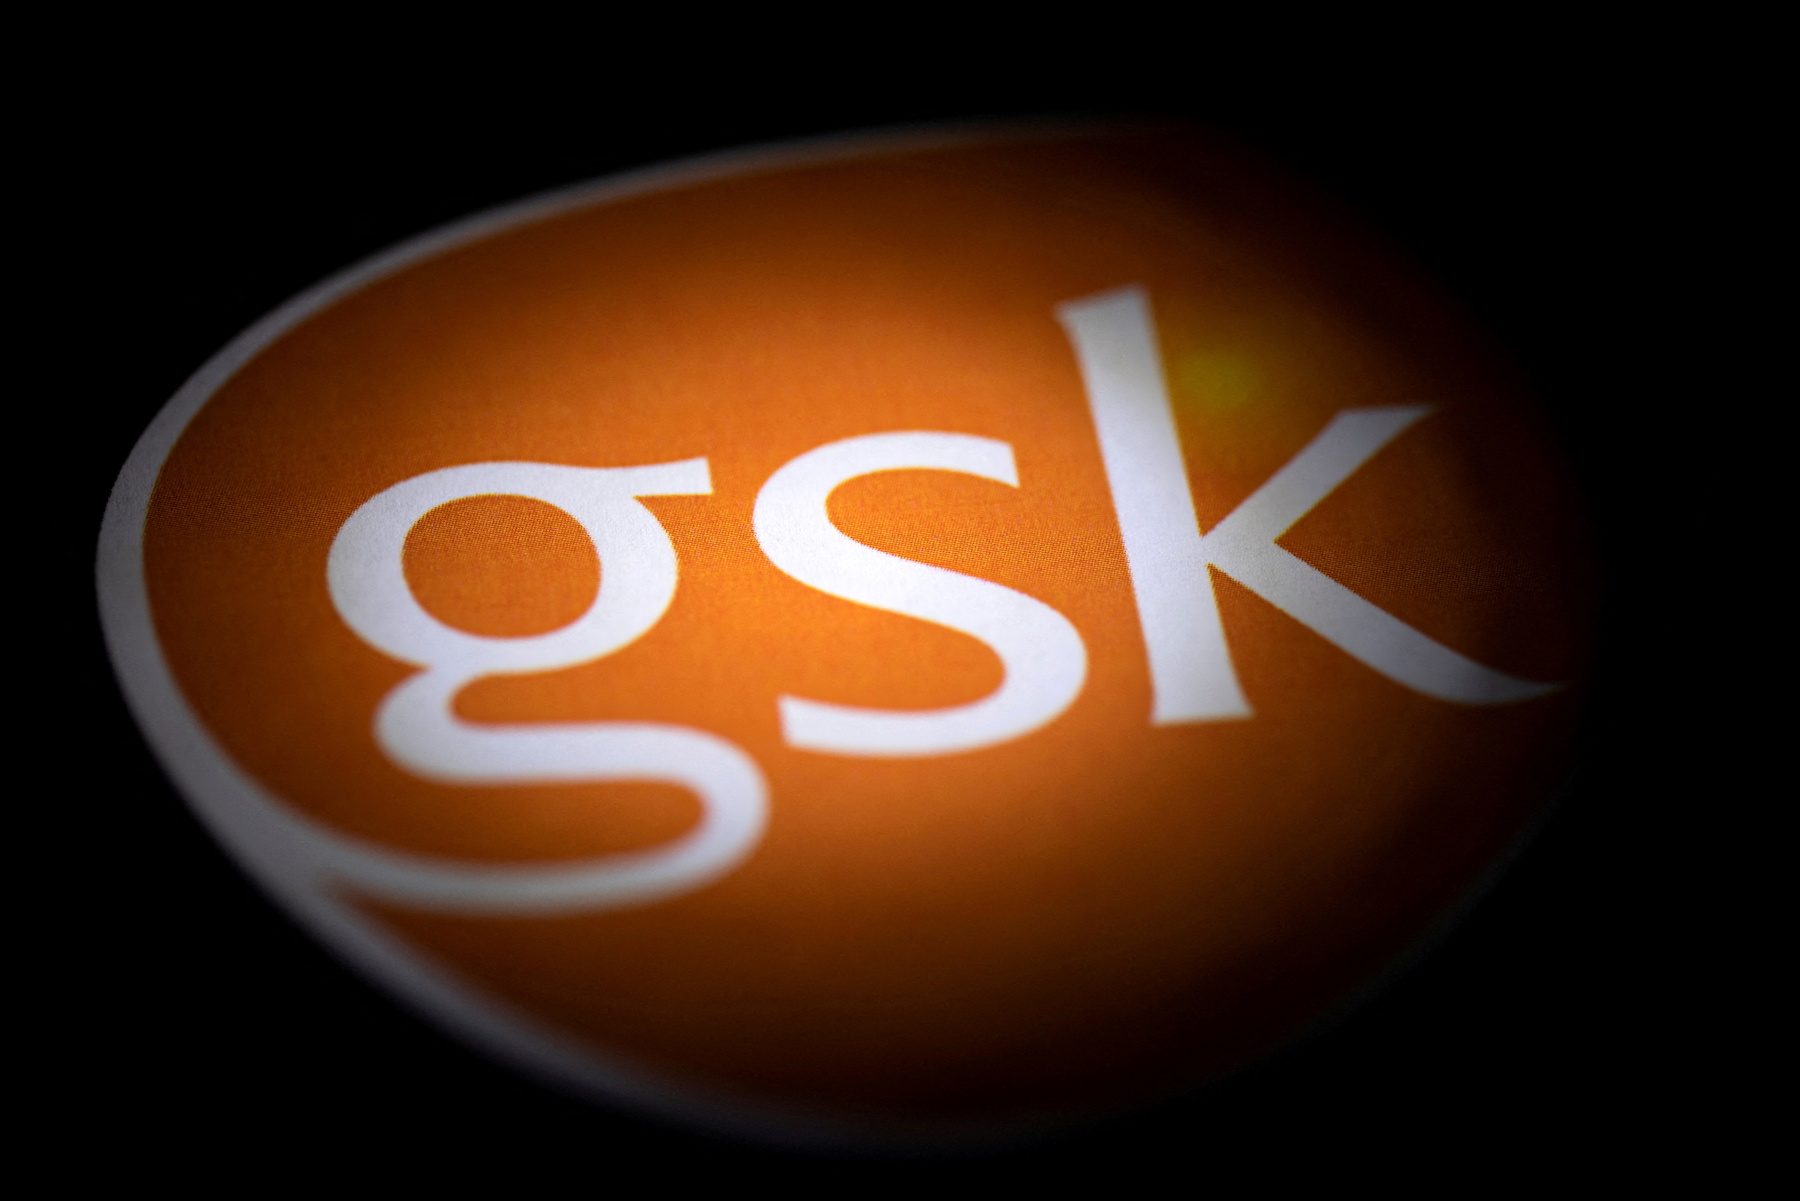 Gsk 980. GSK лого. Haleon логотип. GSK GLAXOSMITHKLINE logo. Санофи логотип.